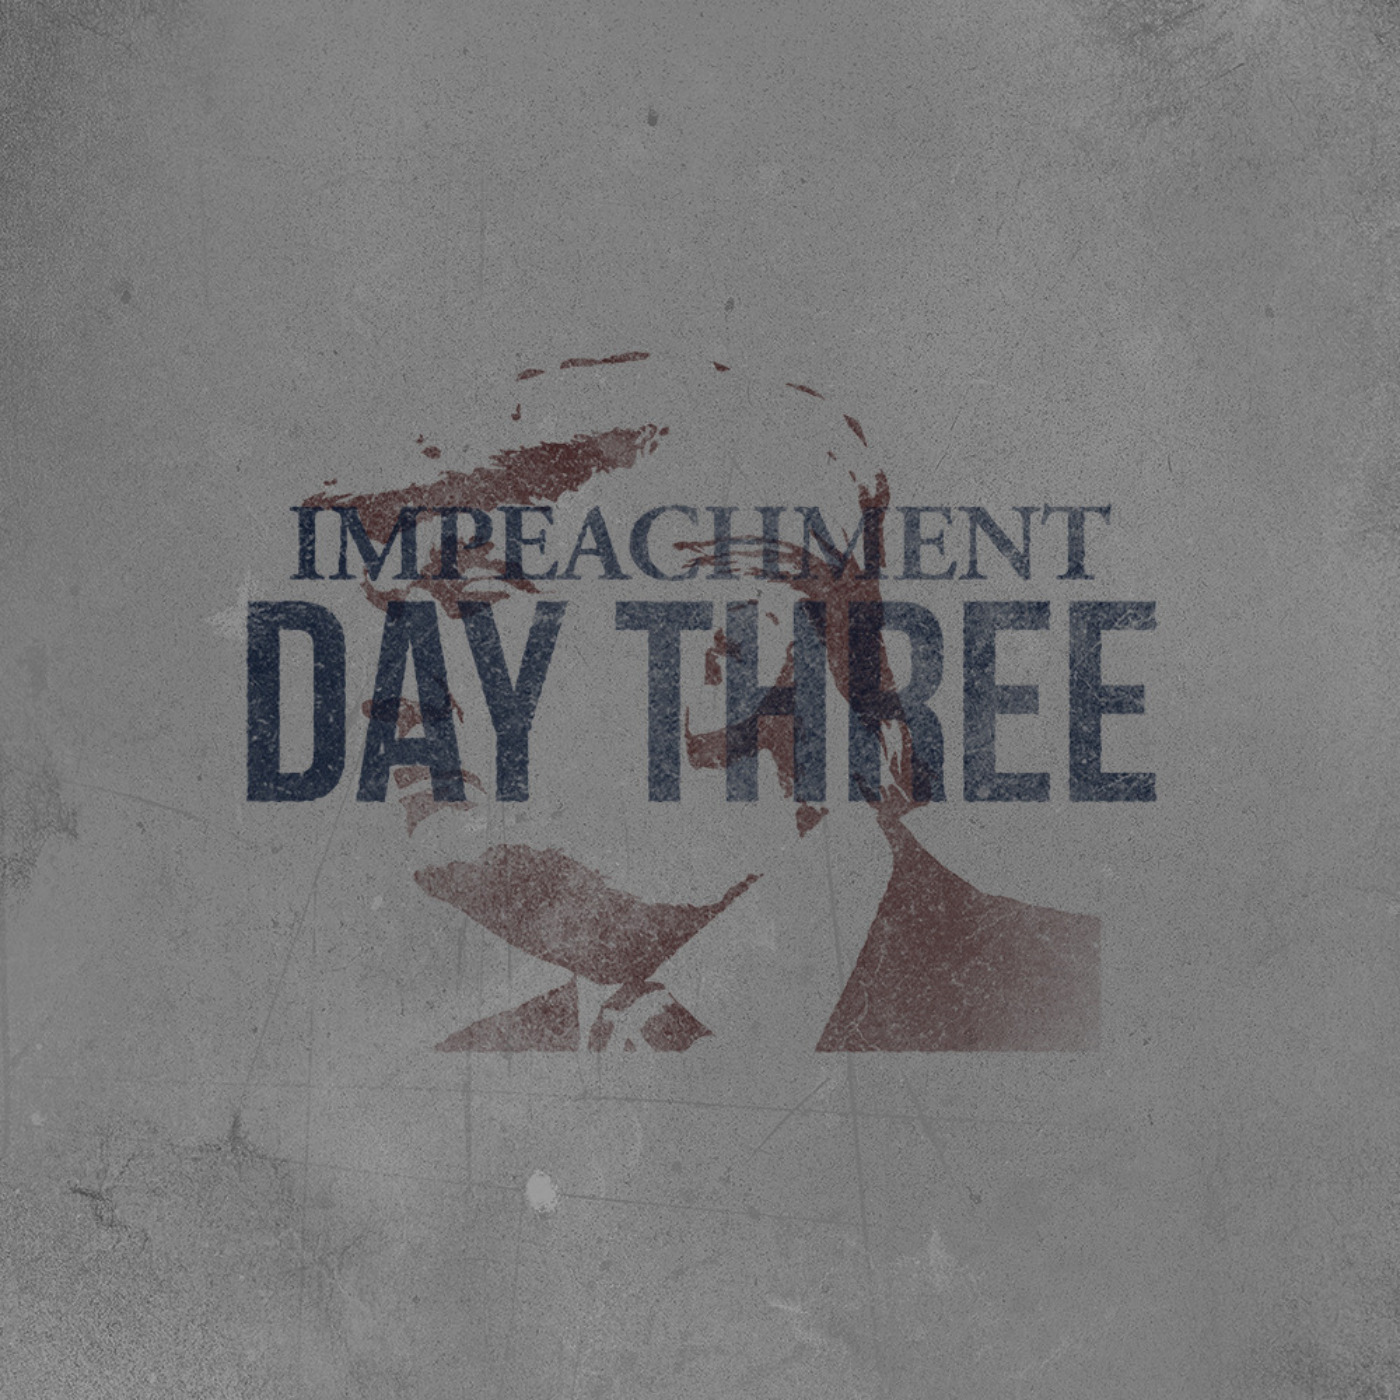 The Impeachment: Day 3